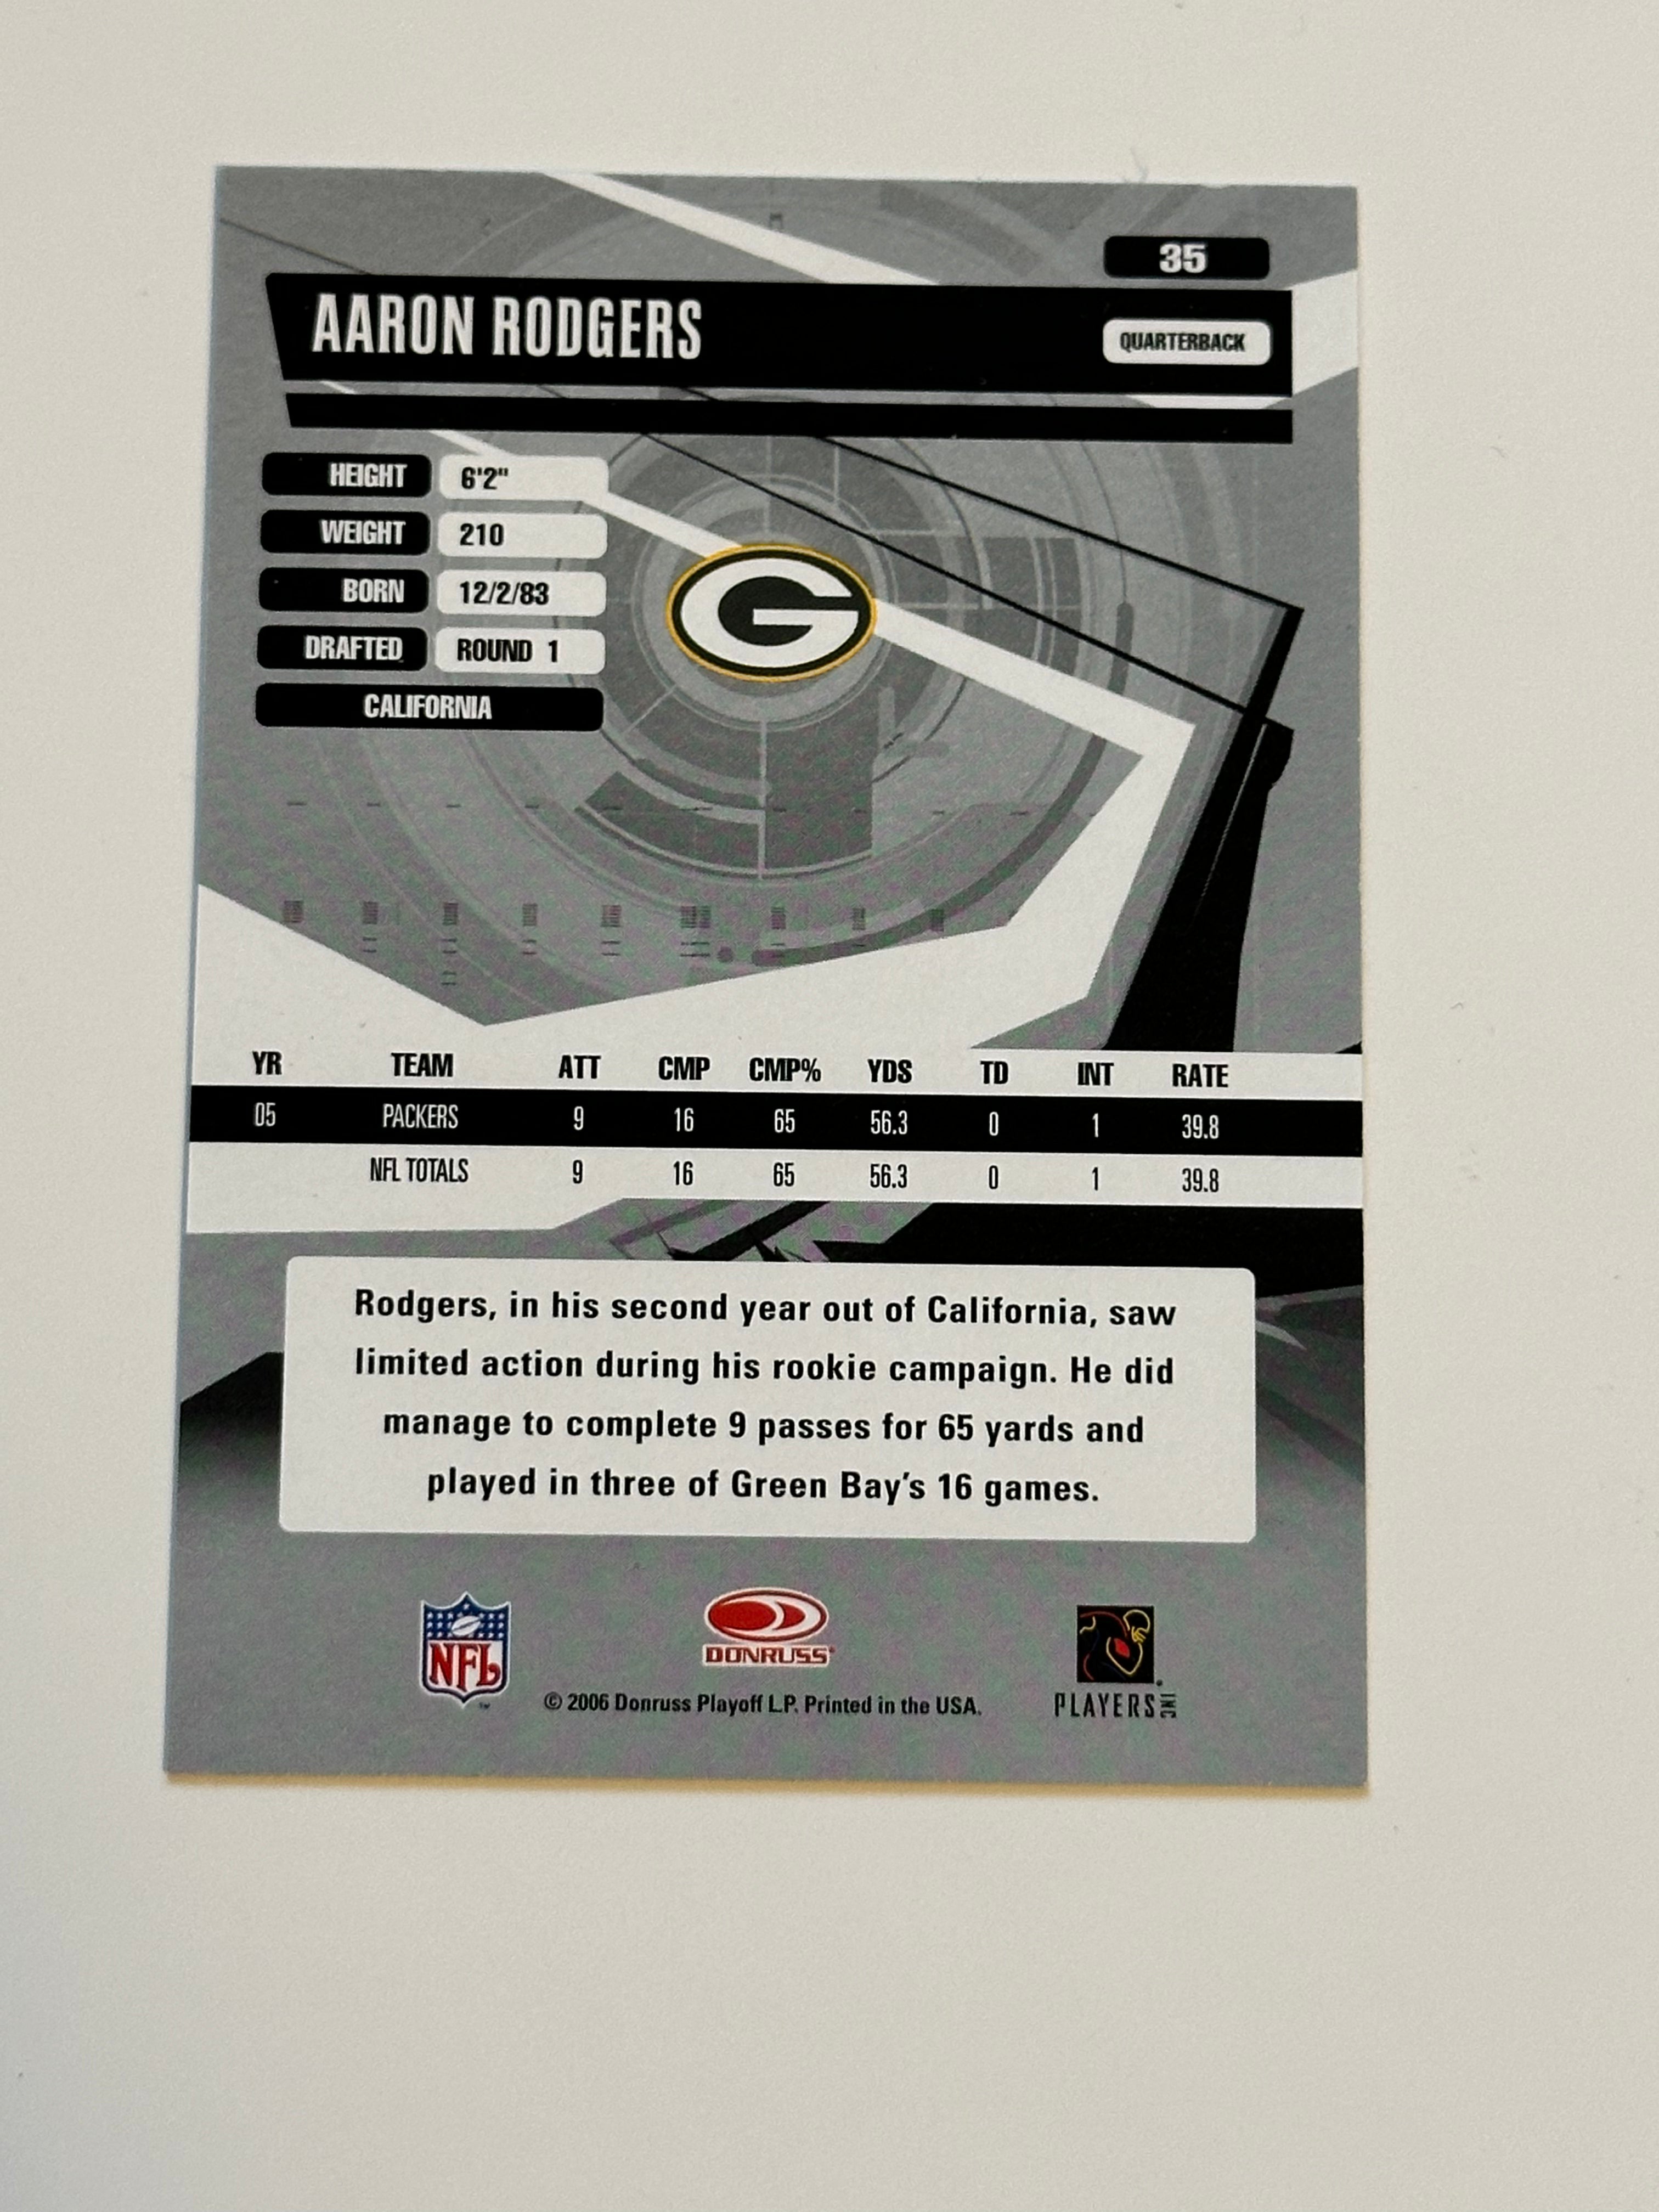 Aaron Rodgers NFL football legend rare Donruss Elite insert card 2006